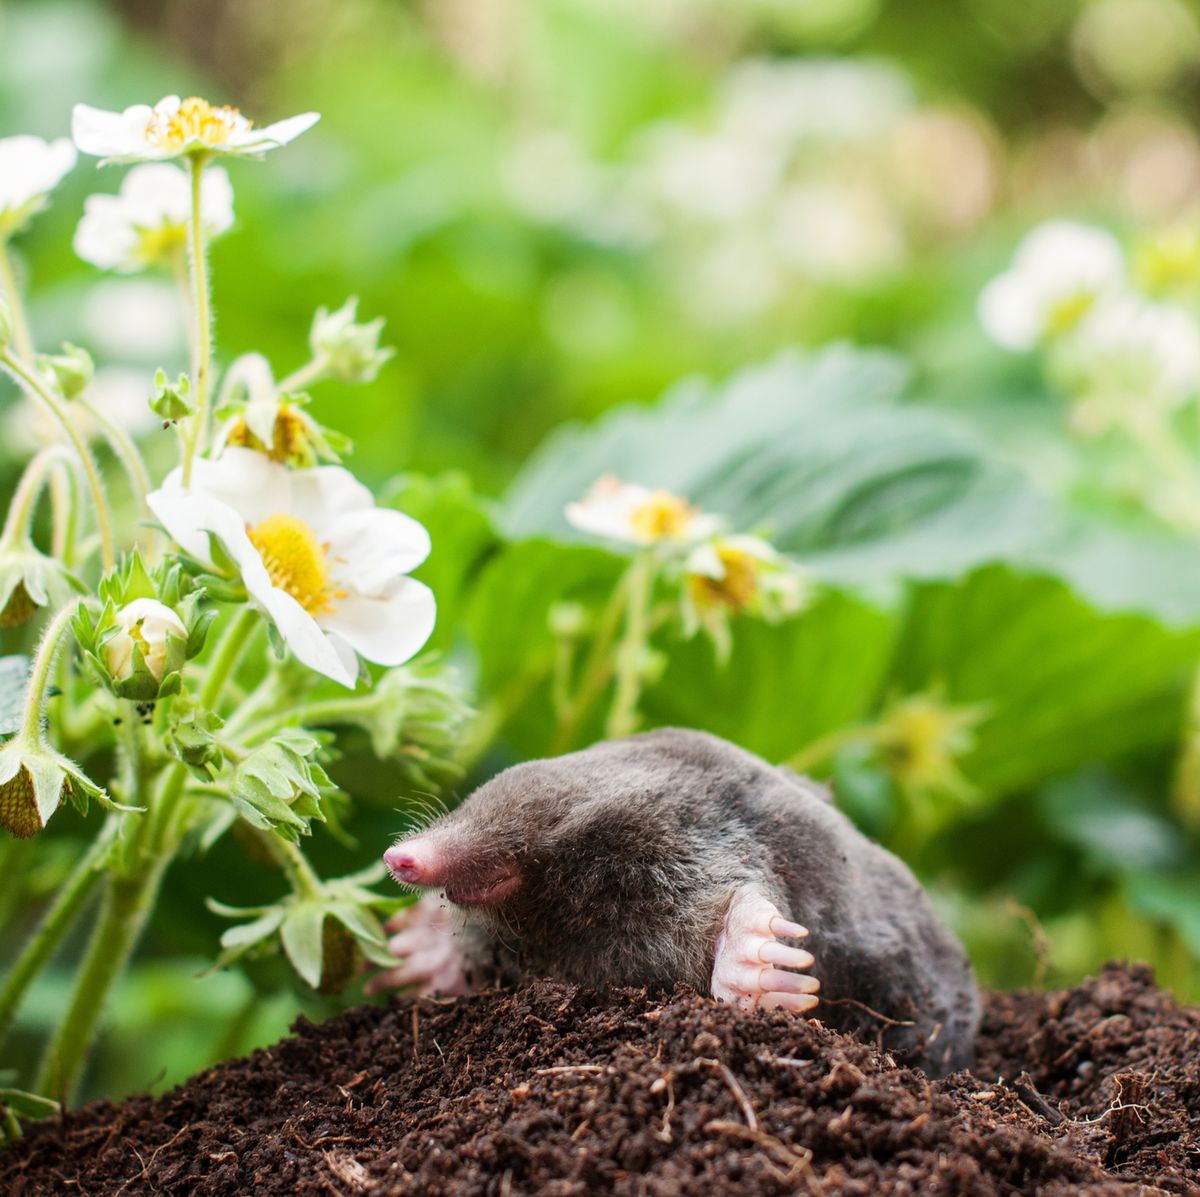 How To Get Rid Of Moles In Your Yard: 7 Effective Methods